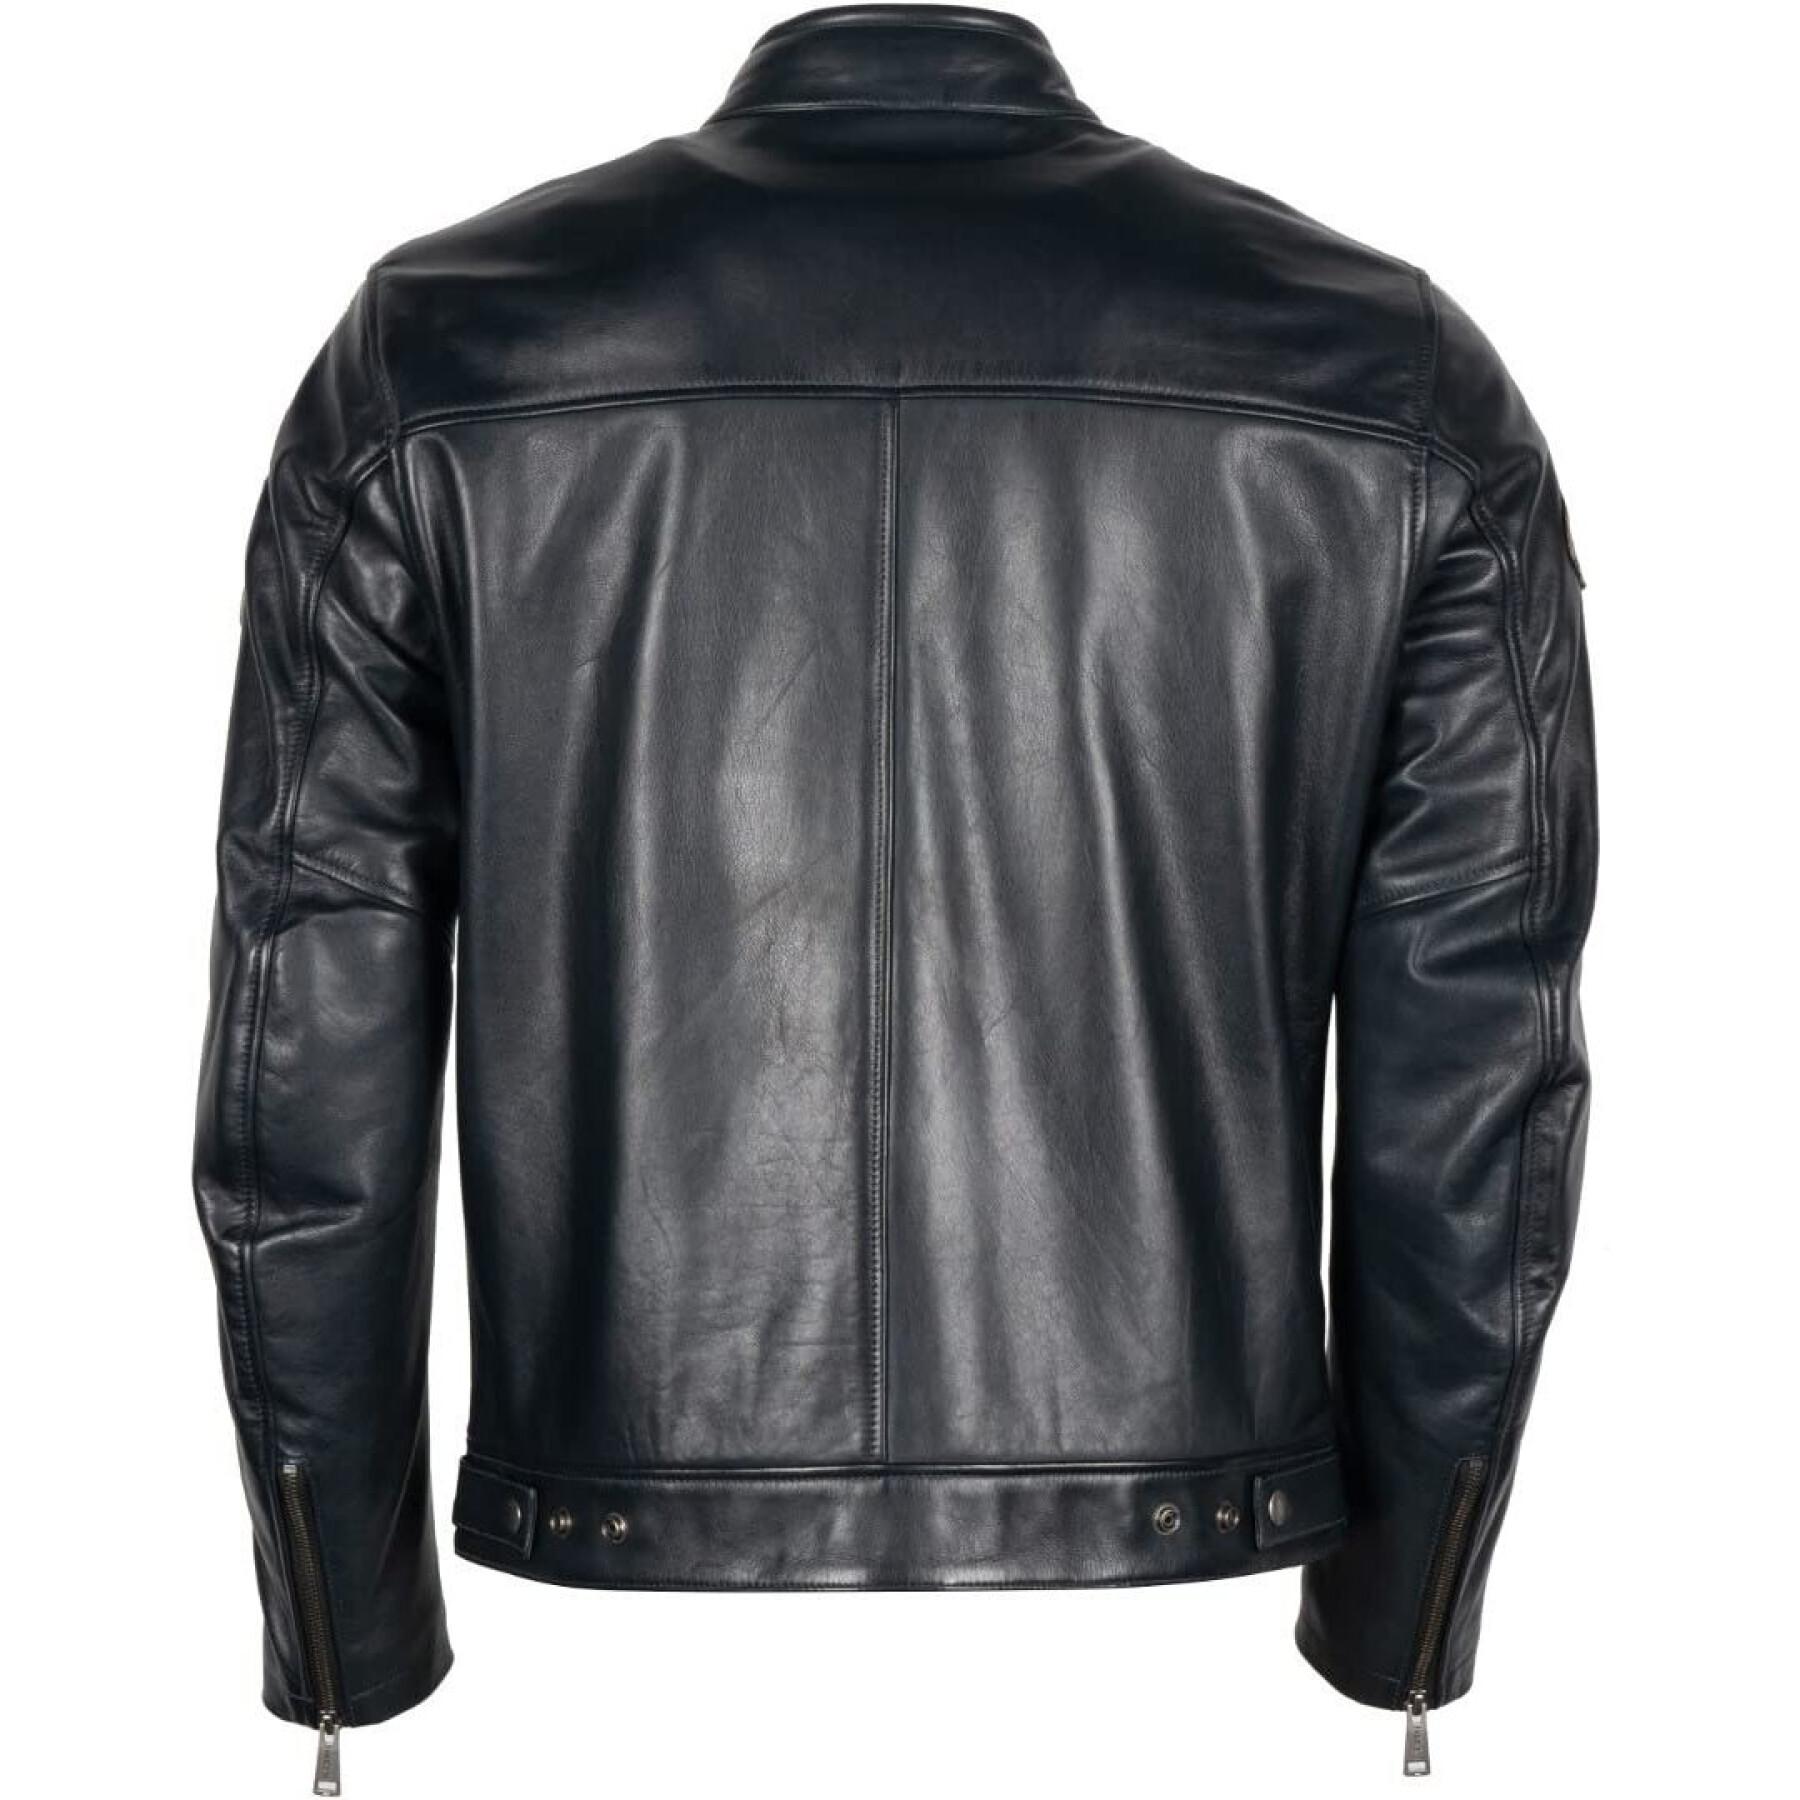 Aniline leather jacket Helstons race